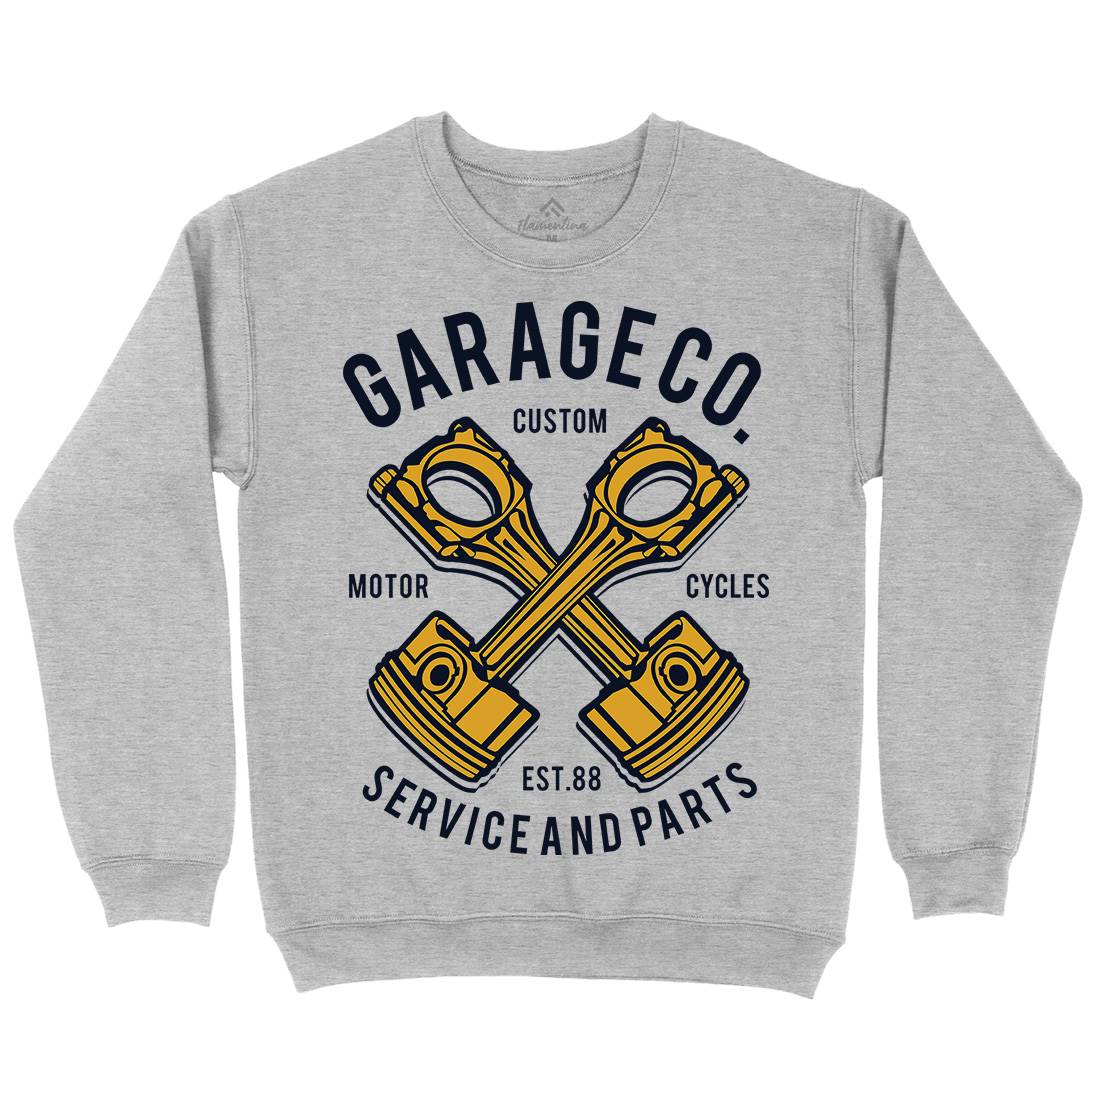 Garage Co Kids Crew Neck Sweatshirt Cars B216